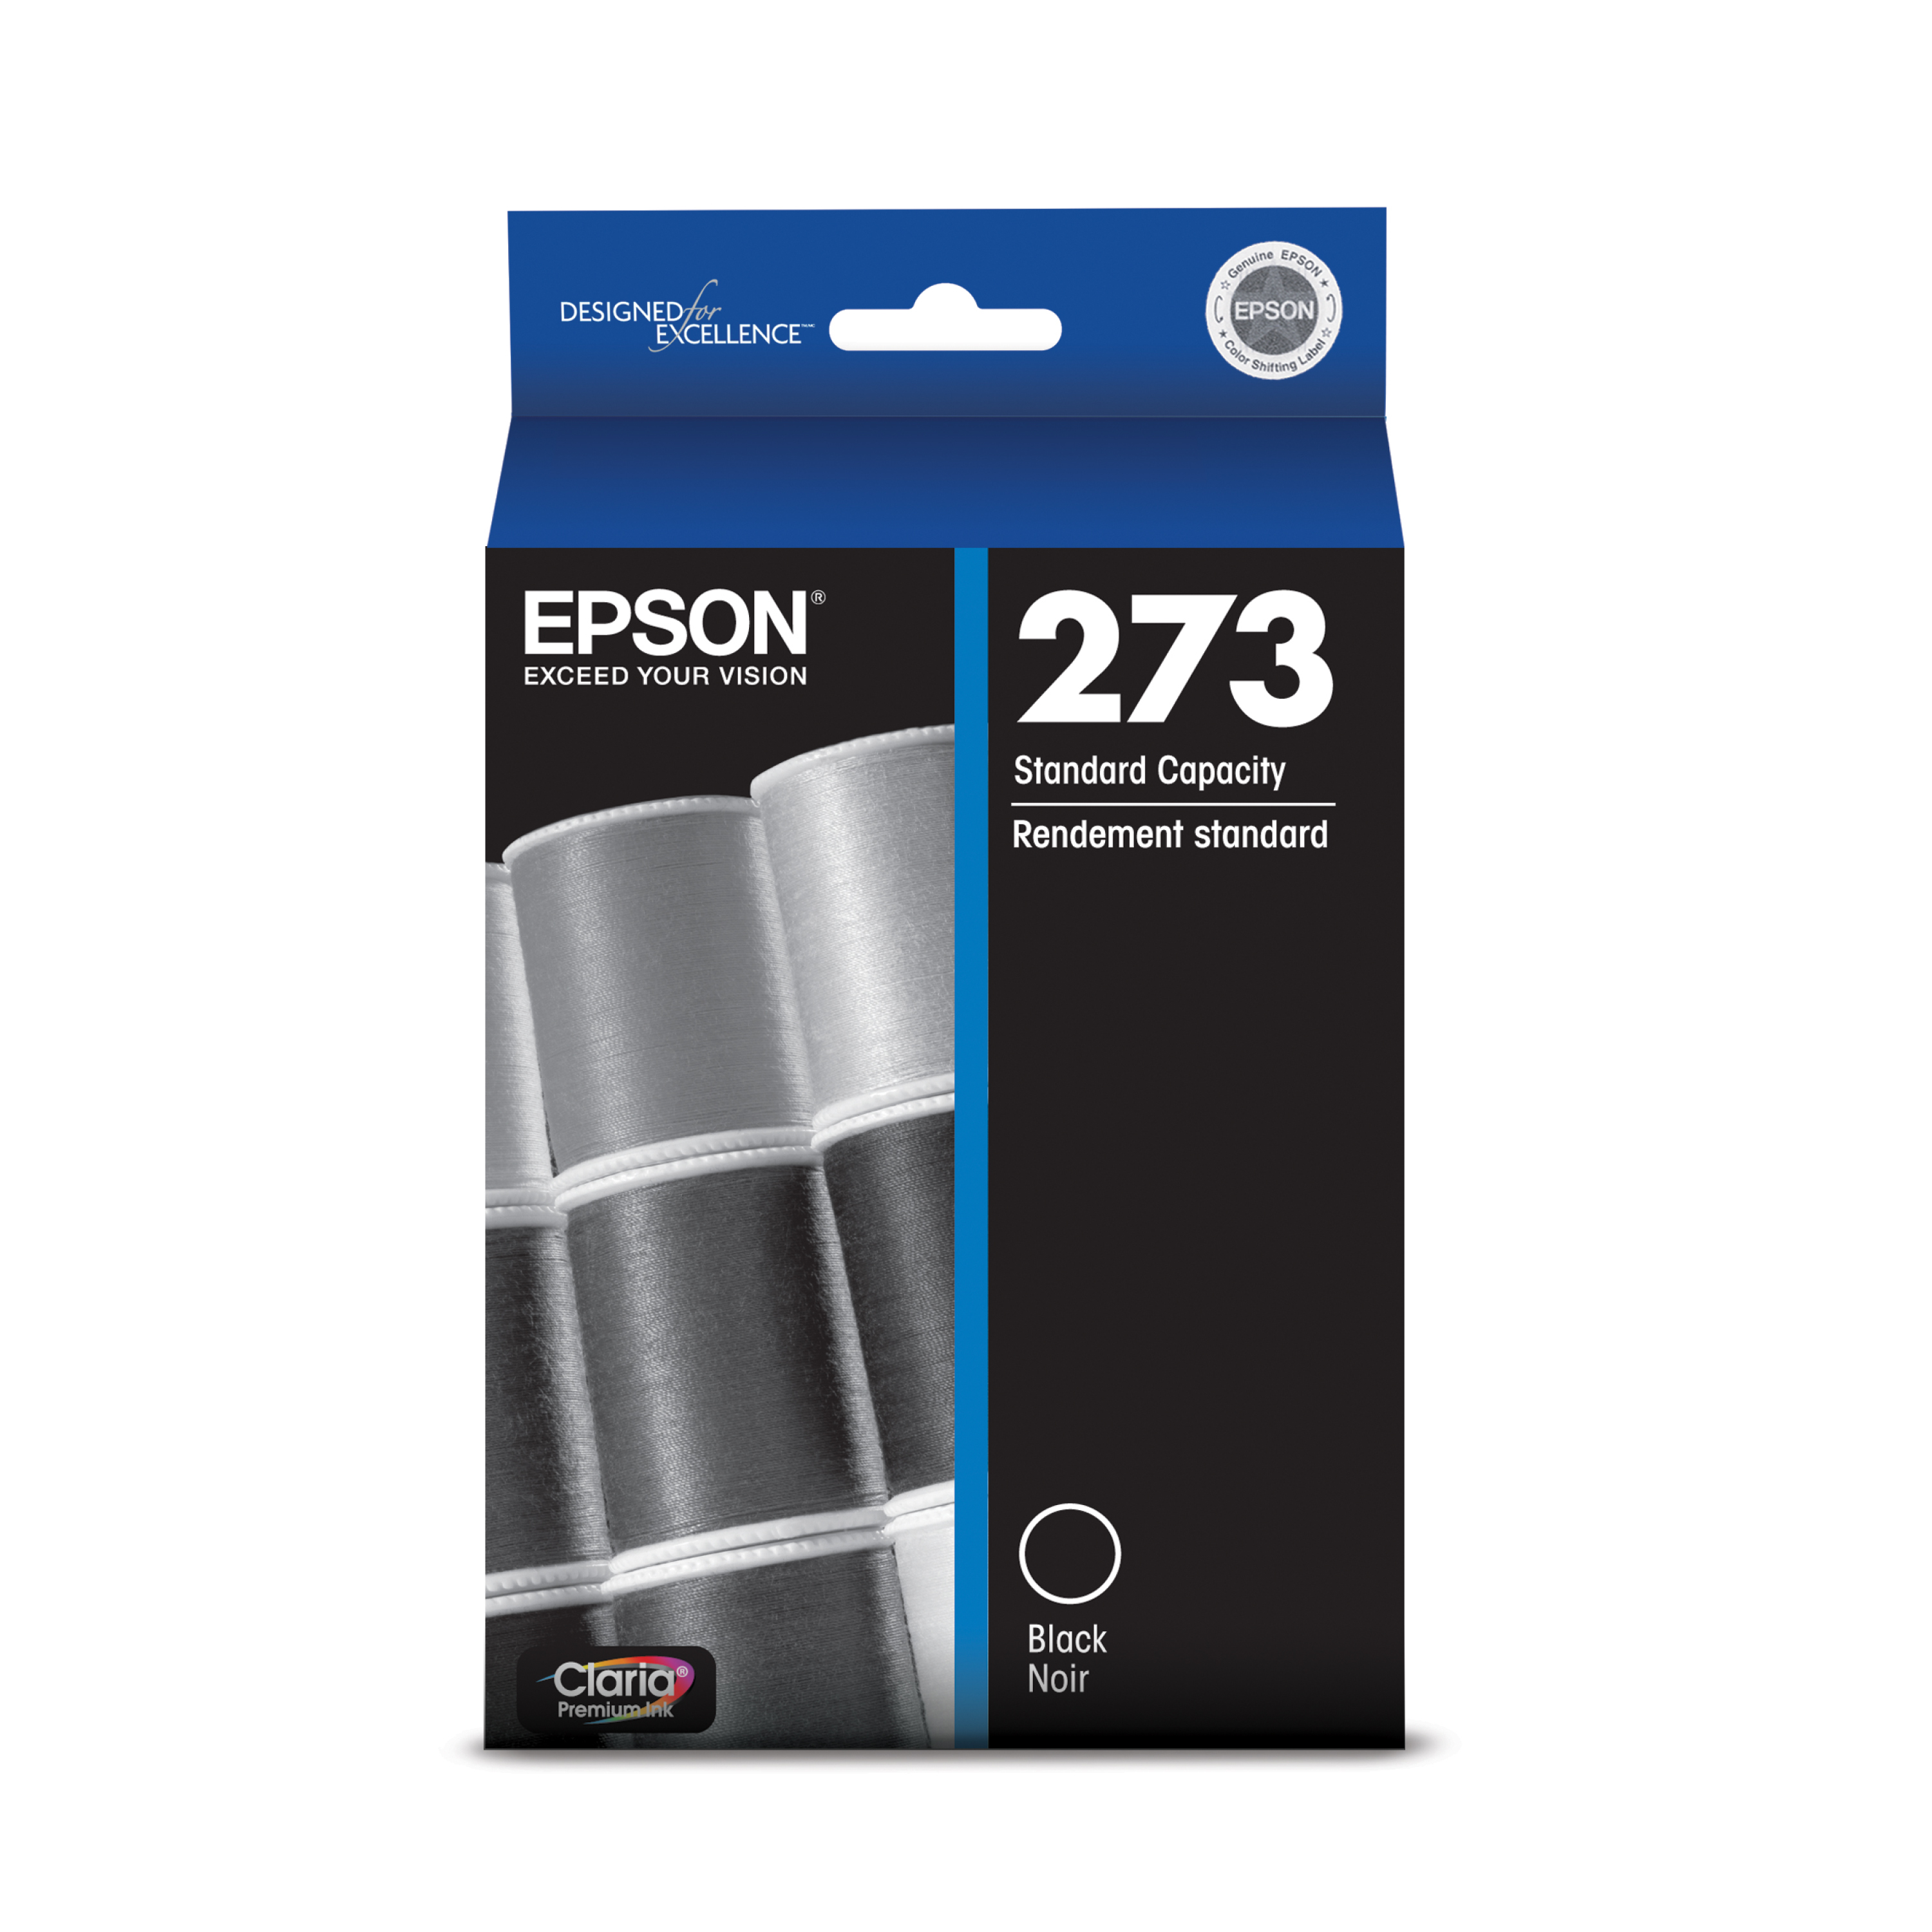 Epson T273 Claria Genuine Ink Standard Capacity Black Cartridge - image 1 of 5